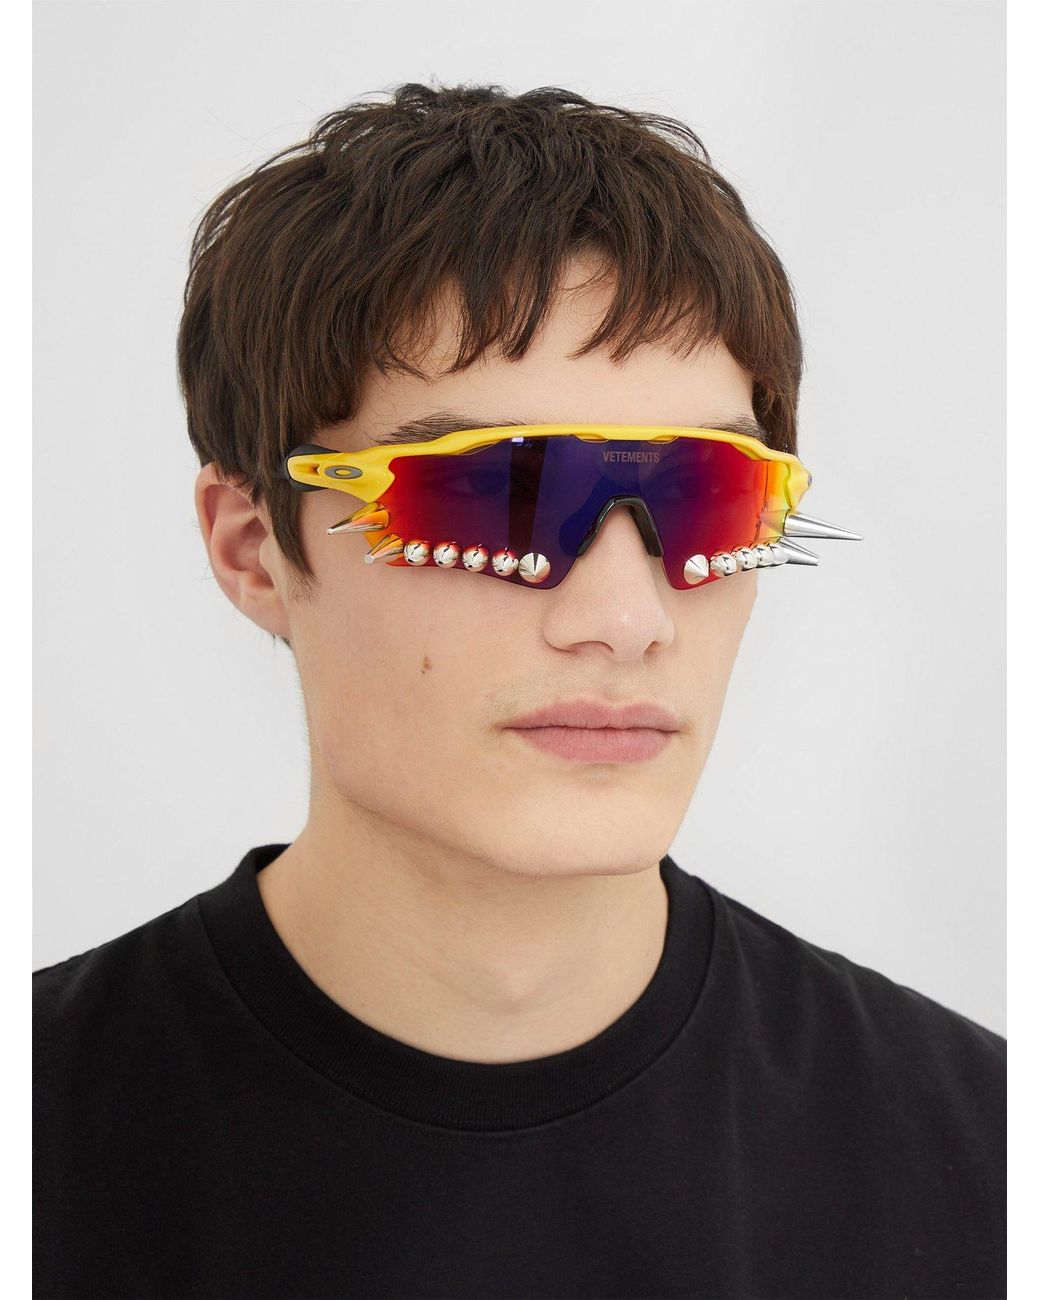 Vetements X Oakley Spikes 400 Sunglasses for Men | Lyst Canada